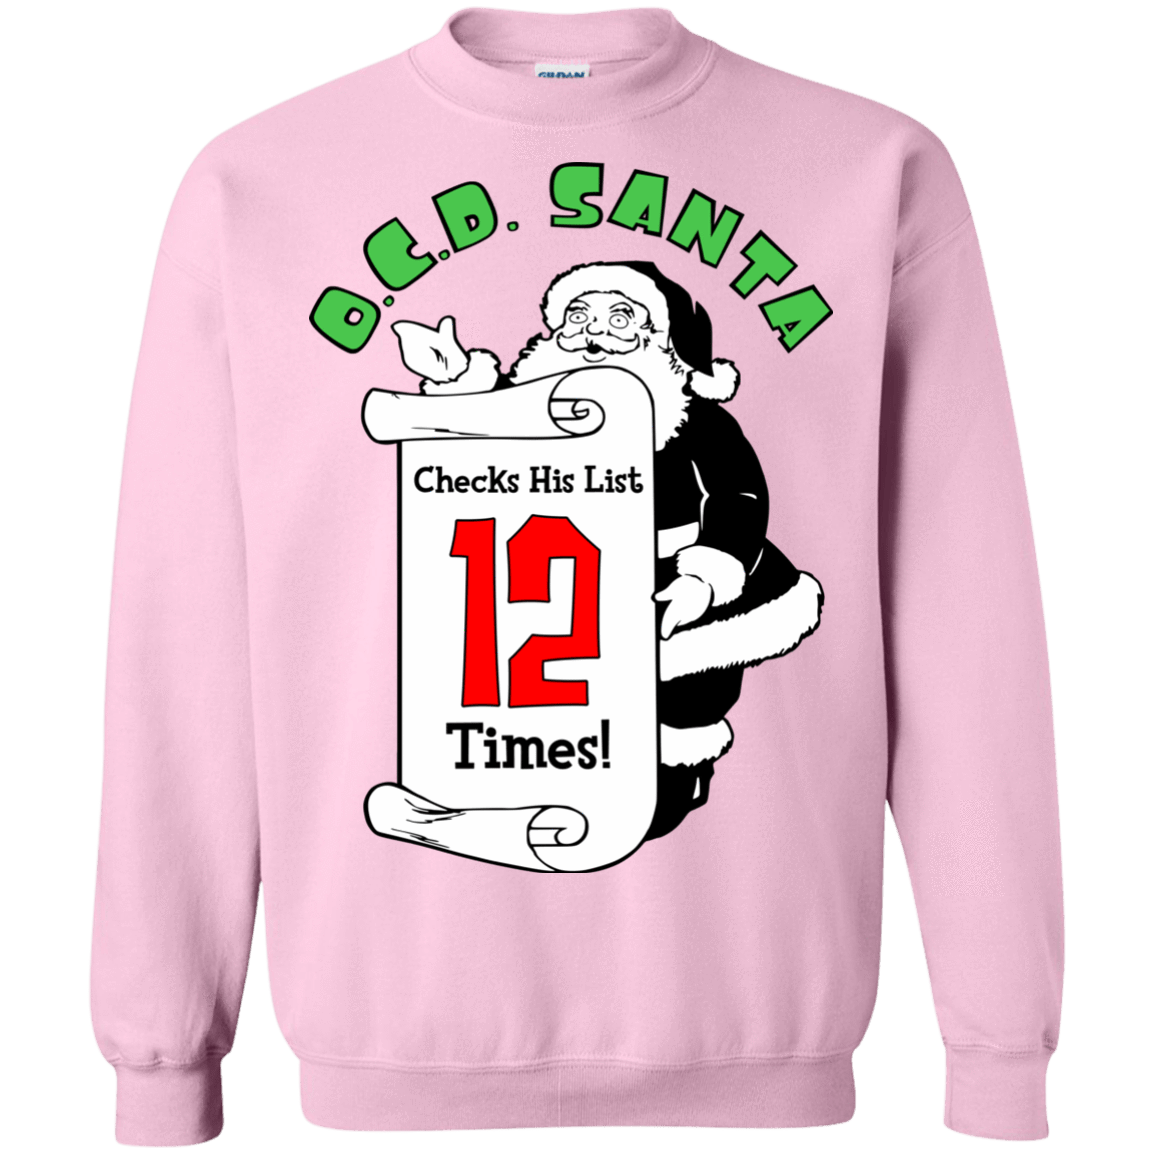 Sweatshirts Light Pink / Small OCD Santa Crewneck Sweatshirt